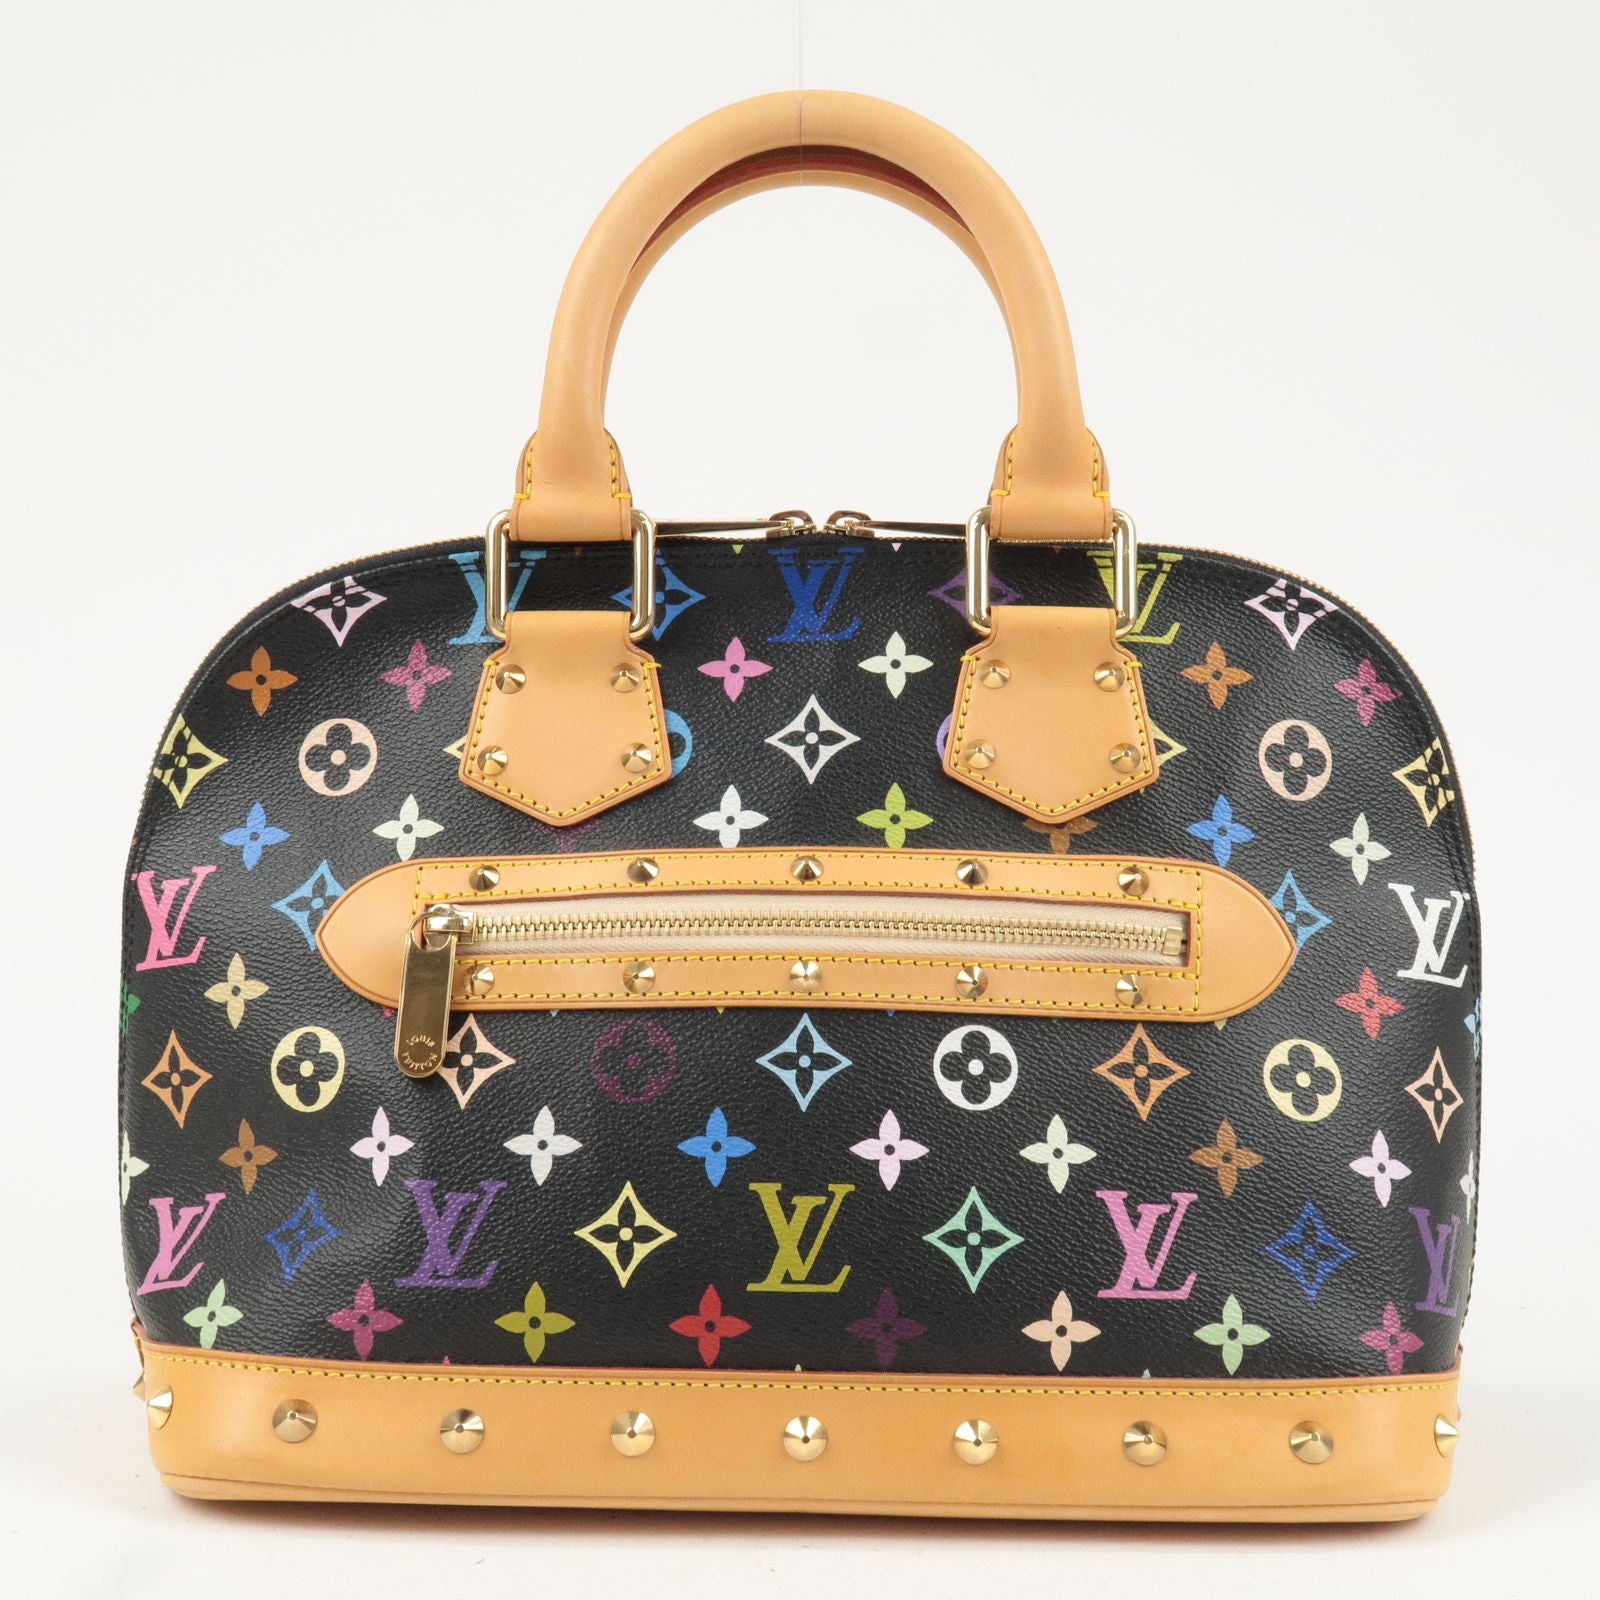 Louis Vuitton - Alma BB Bag - Black - Leather - Women - Luxury